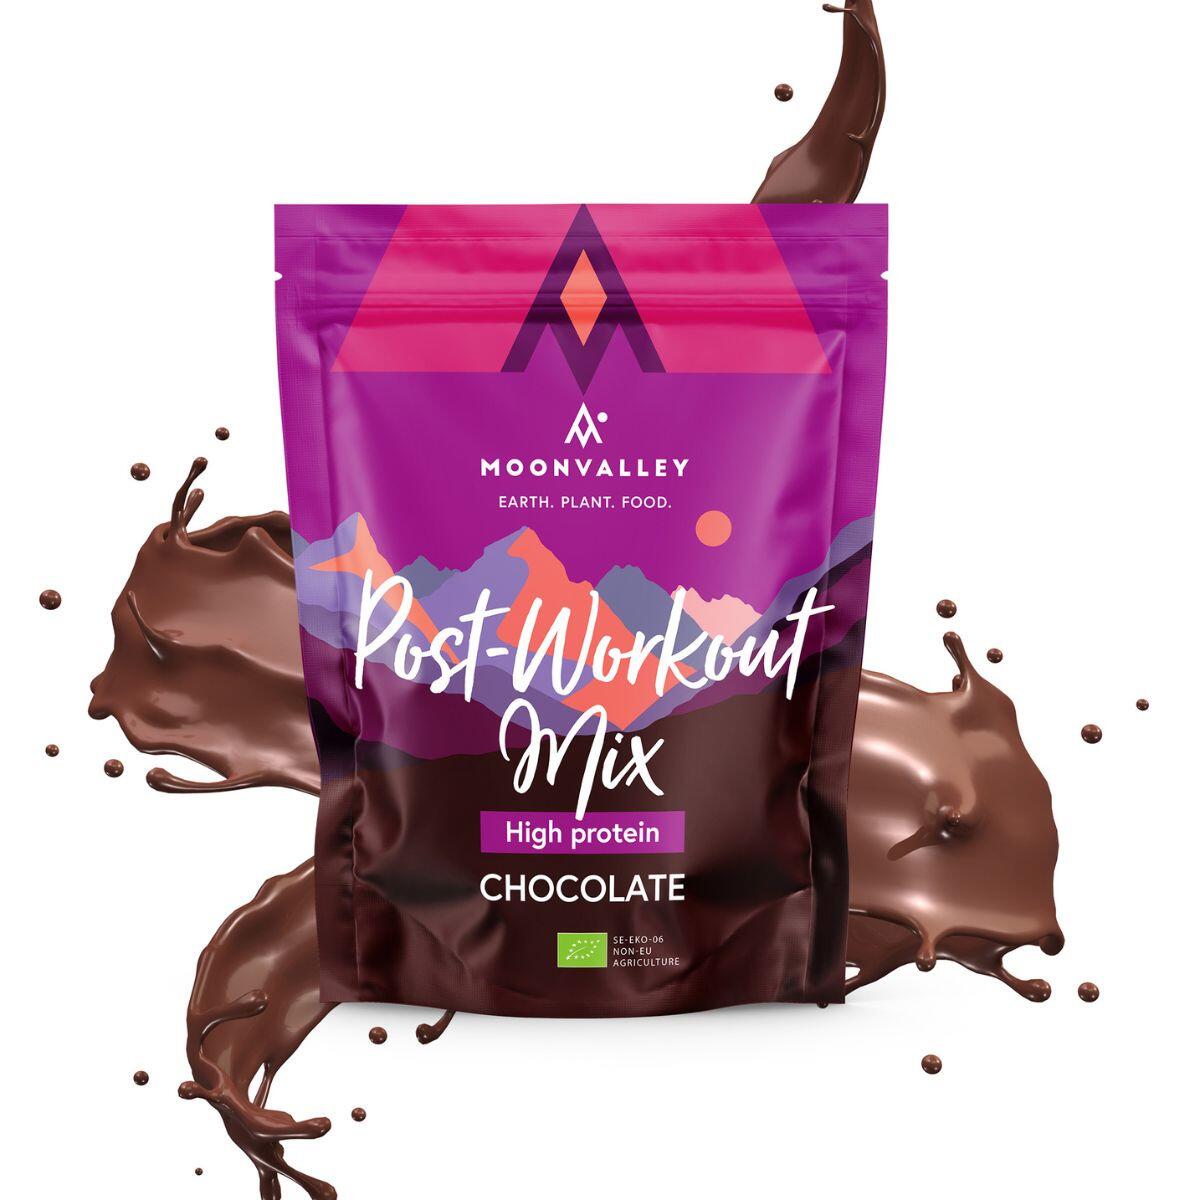 Moonvalley's Organic Post-Workout Mix Chocolate'